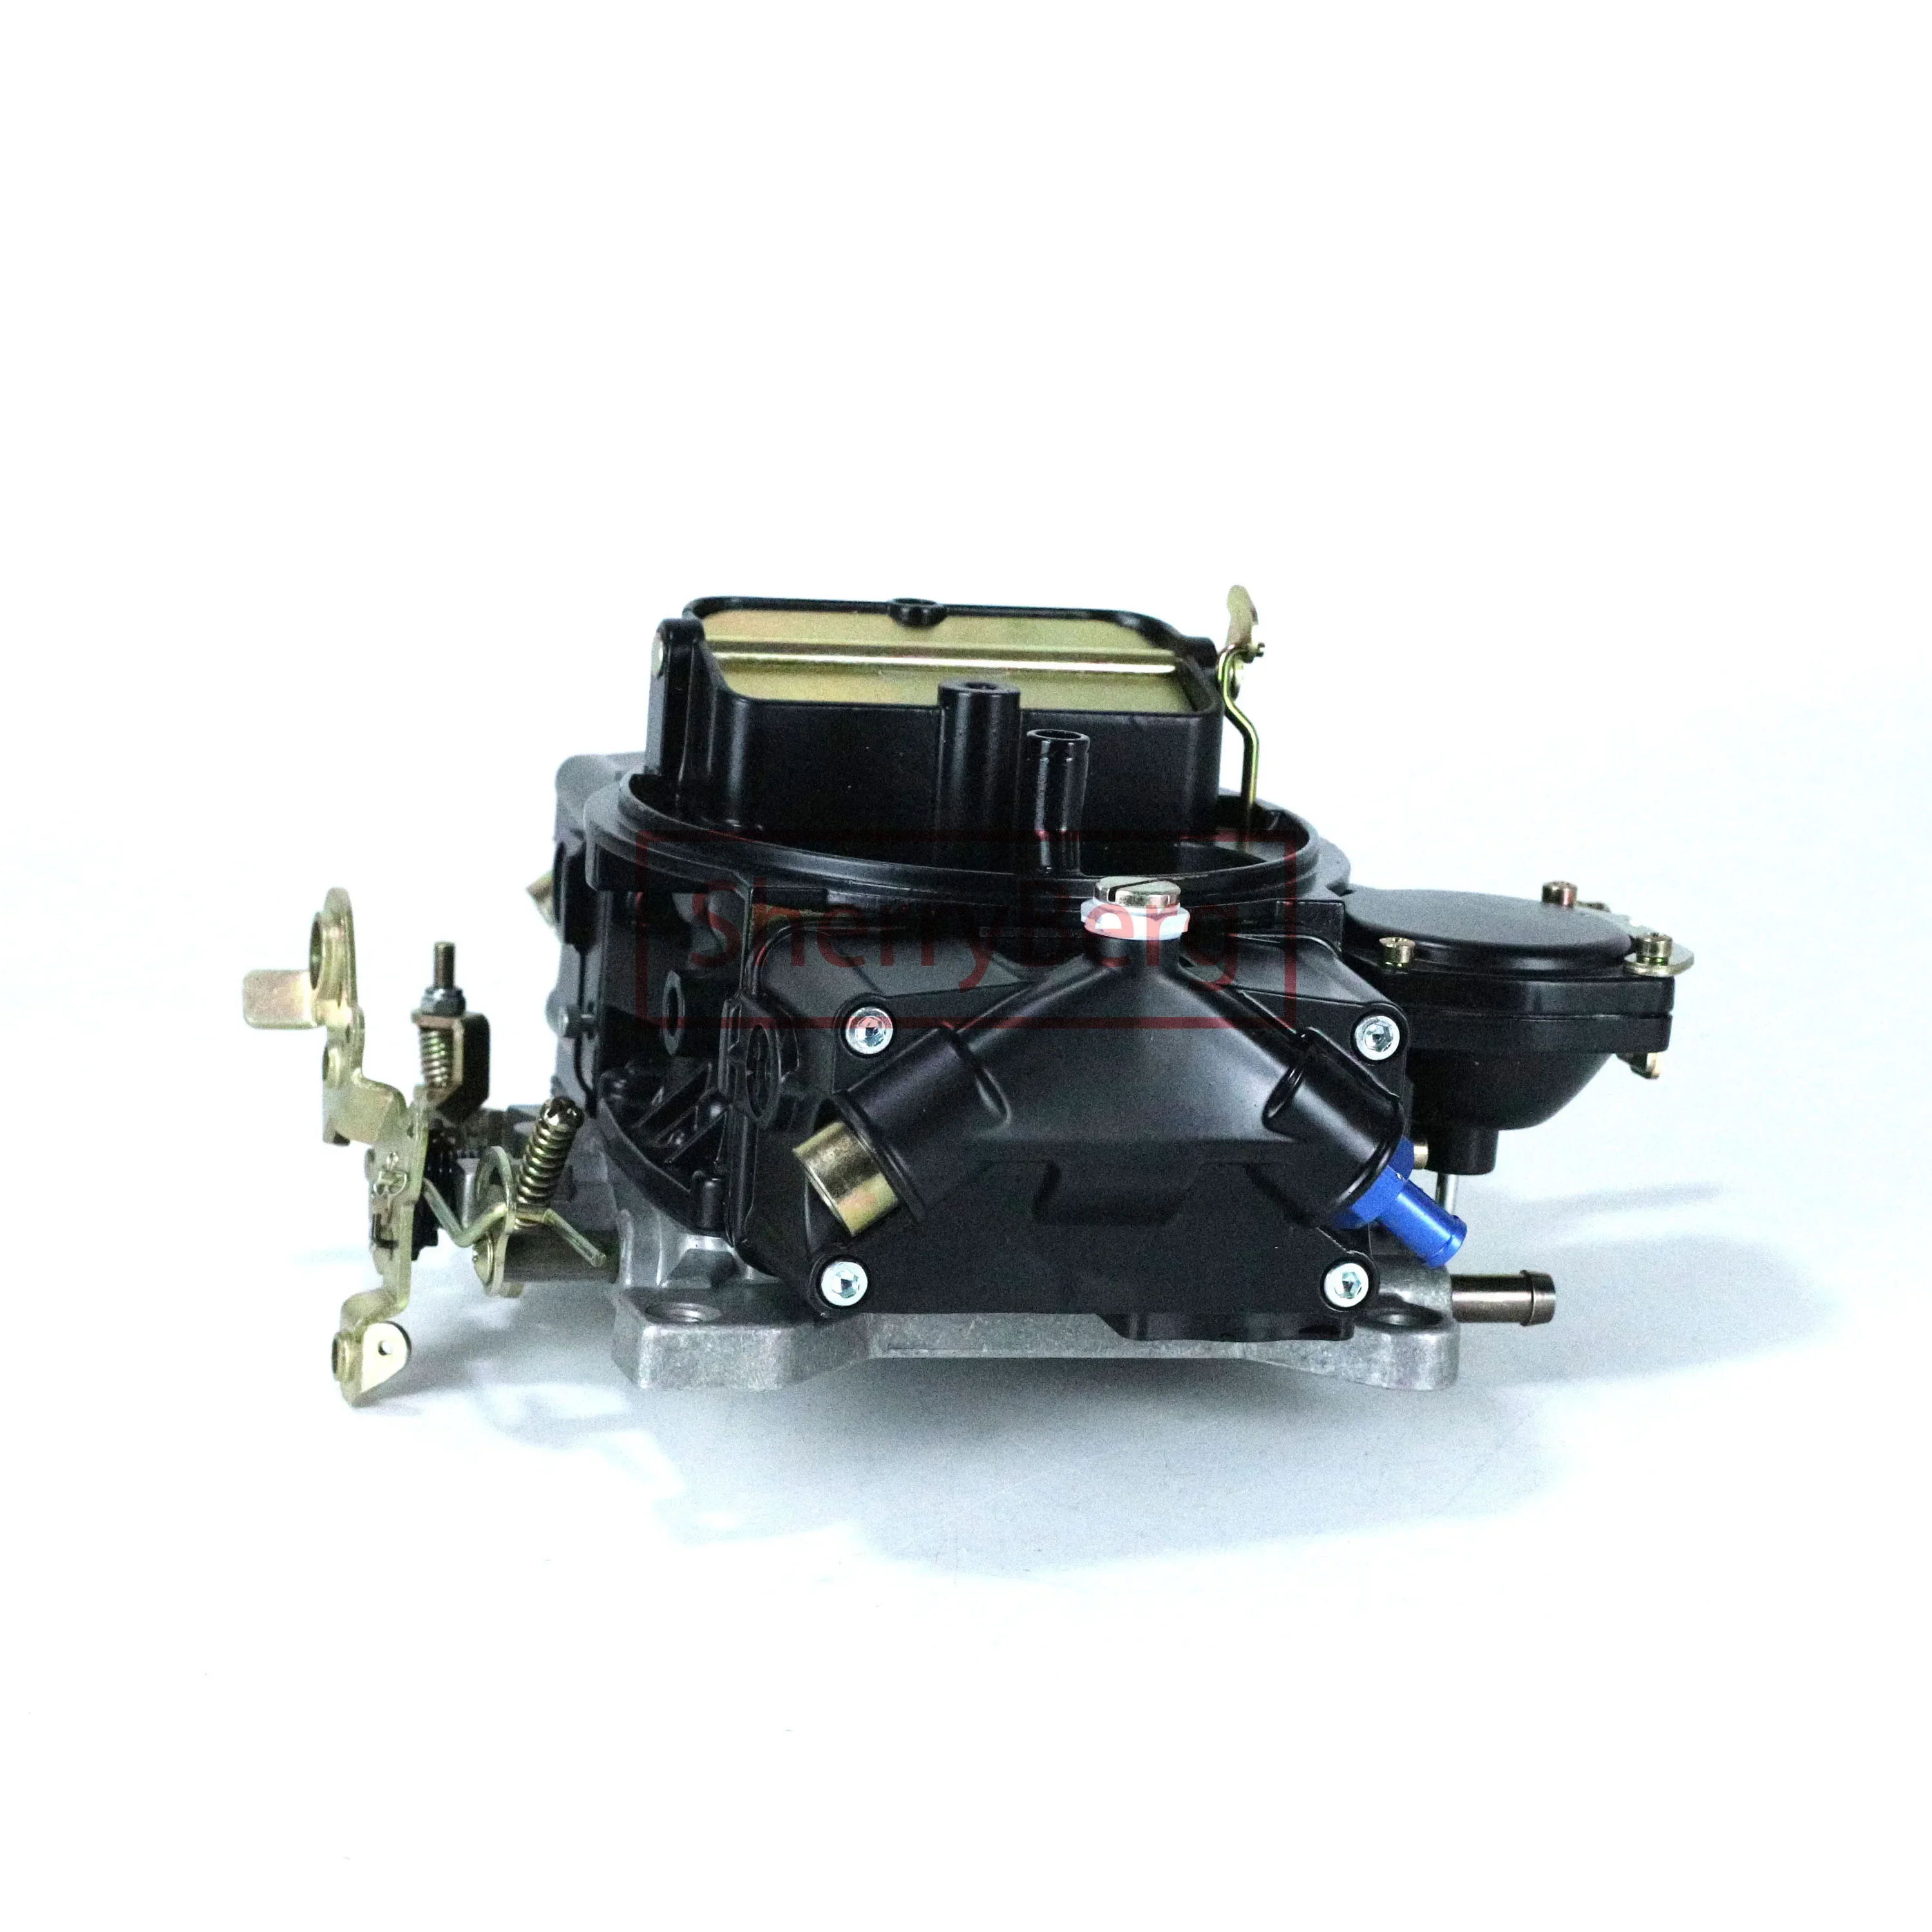 

SherryBerg Carburador Carburettor Carb Rep. For HOLLEY CARBURETOR 0-8007 390 CFM 390CFM W/ ELECTRIC CHOKE 4 Barrels Black Color